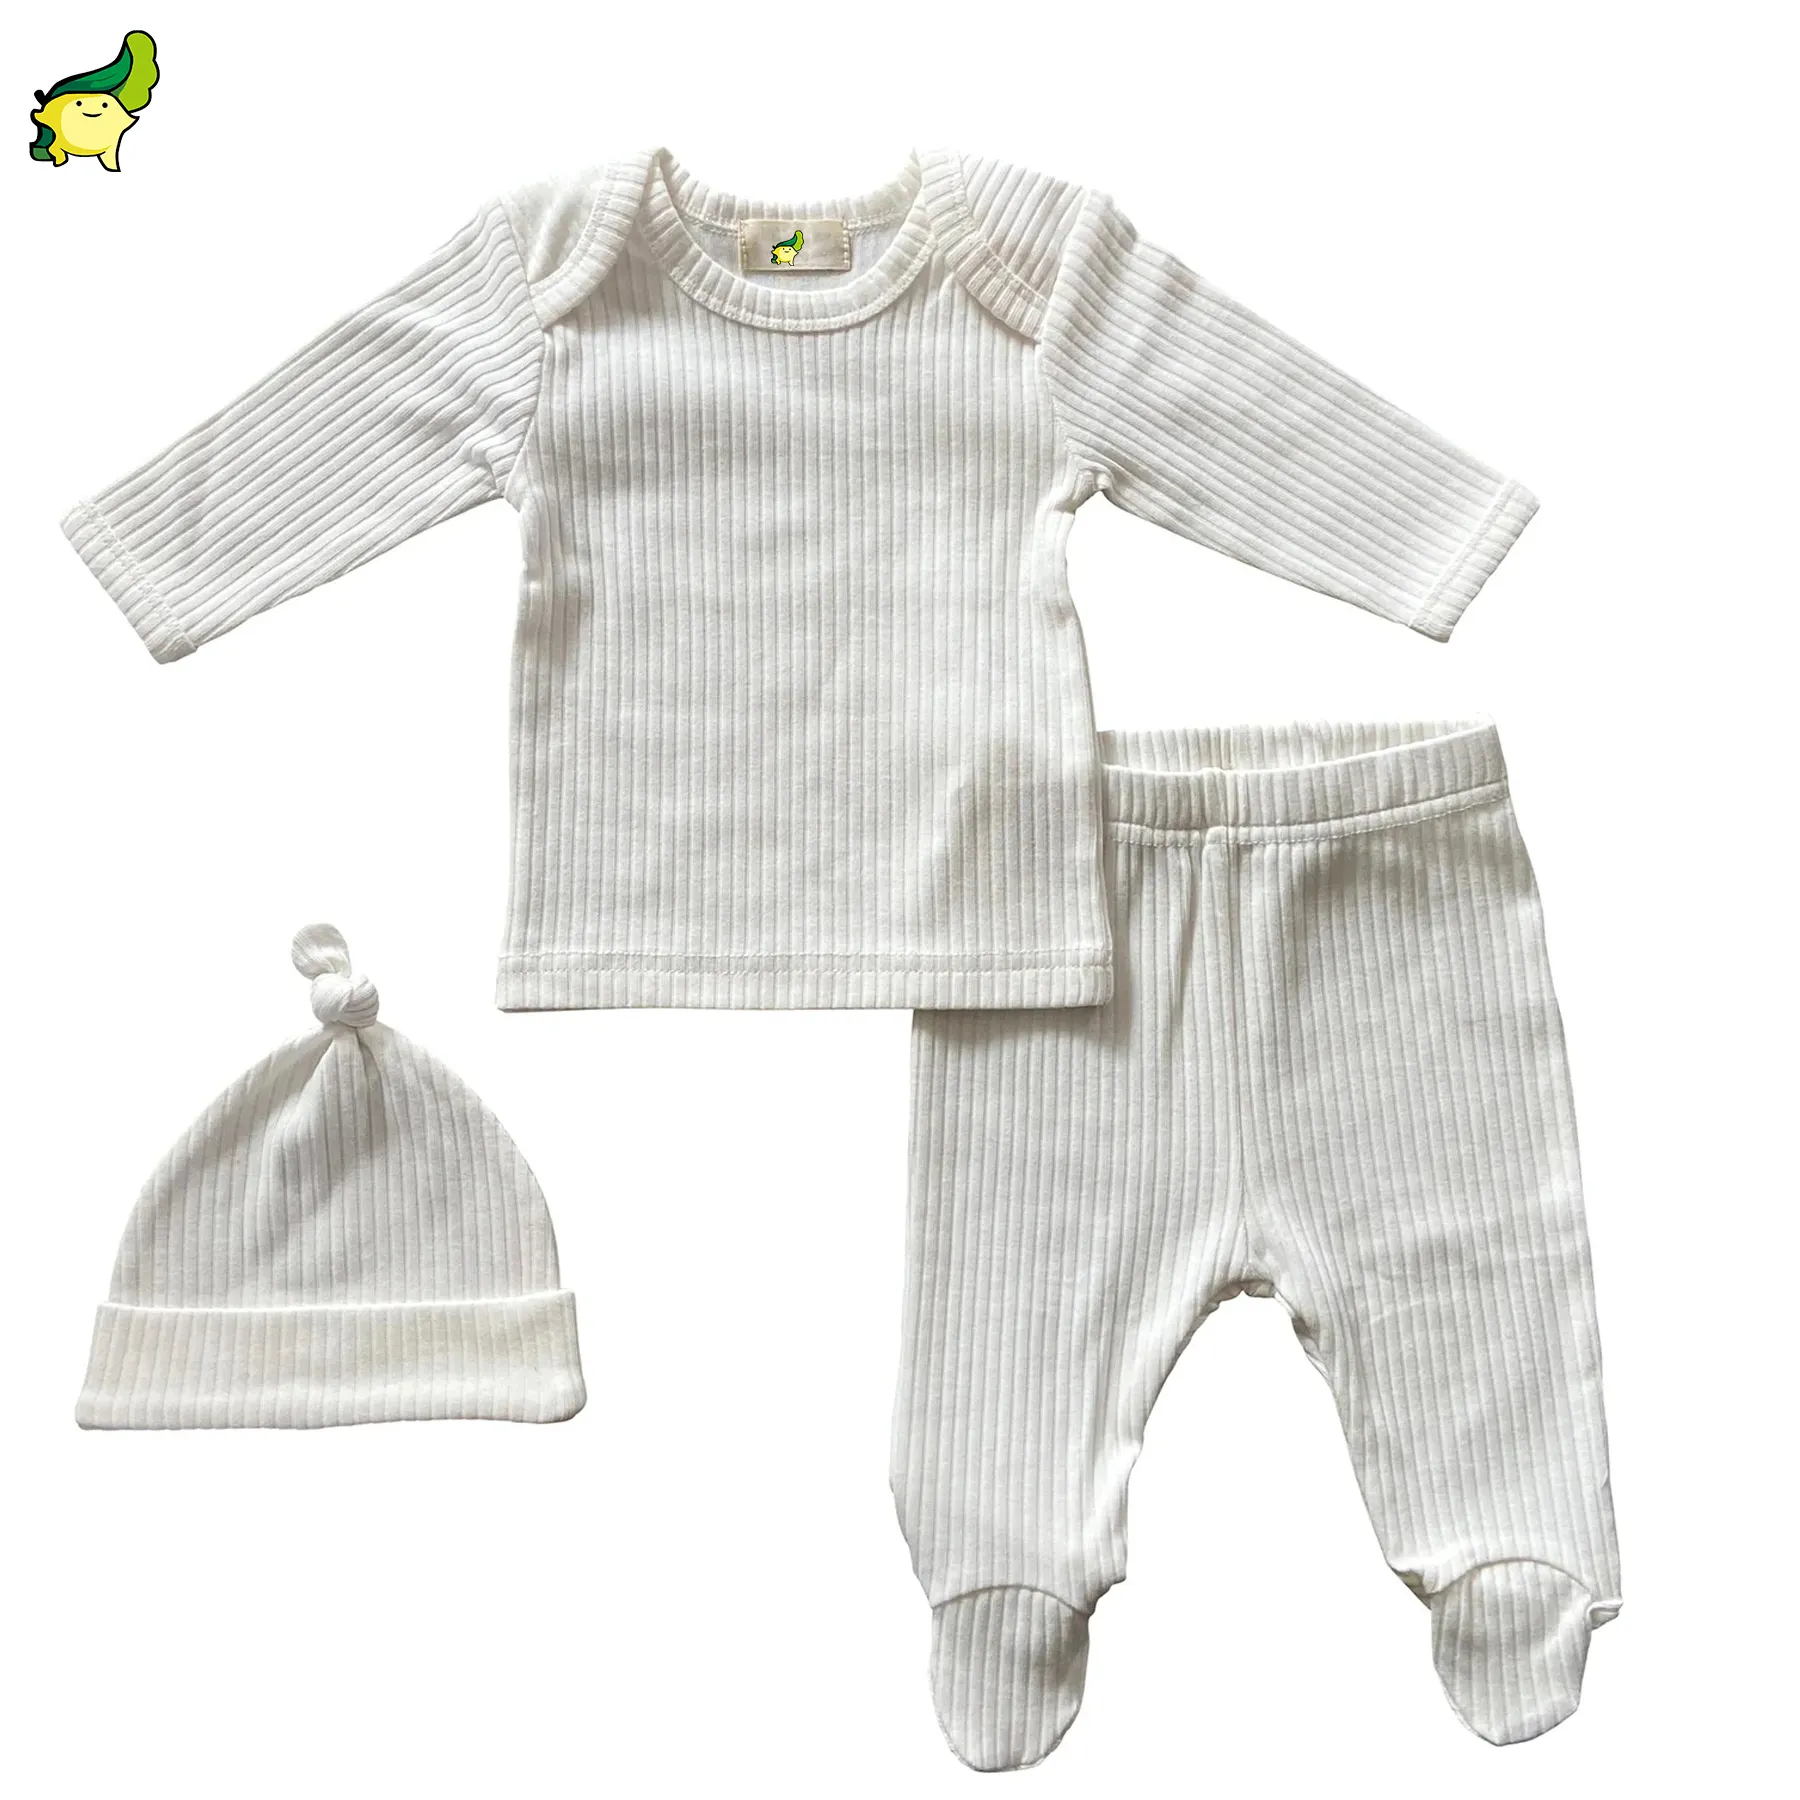 unisex baby clothing sets girls boys 0-3 months Rib 100% organic cotton infant newborn baby clothes